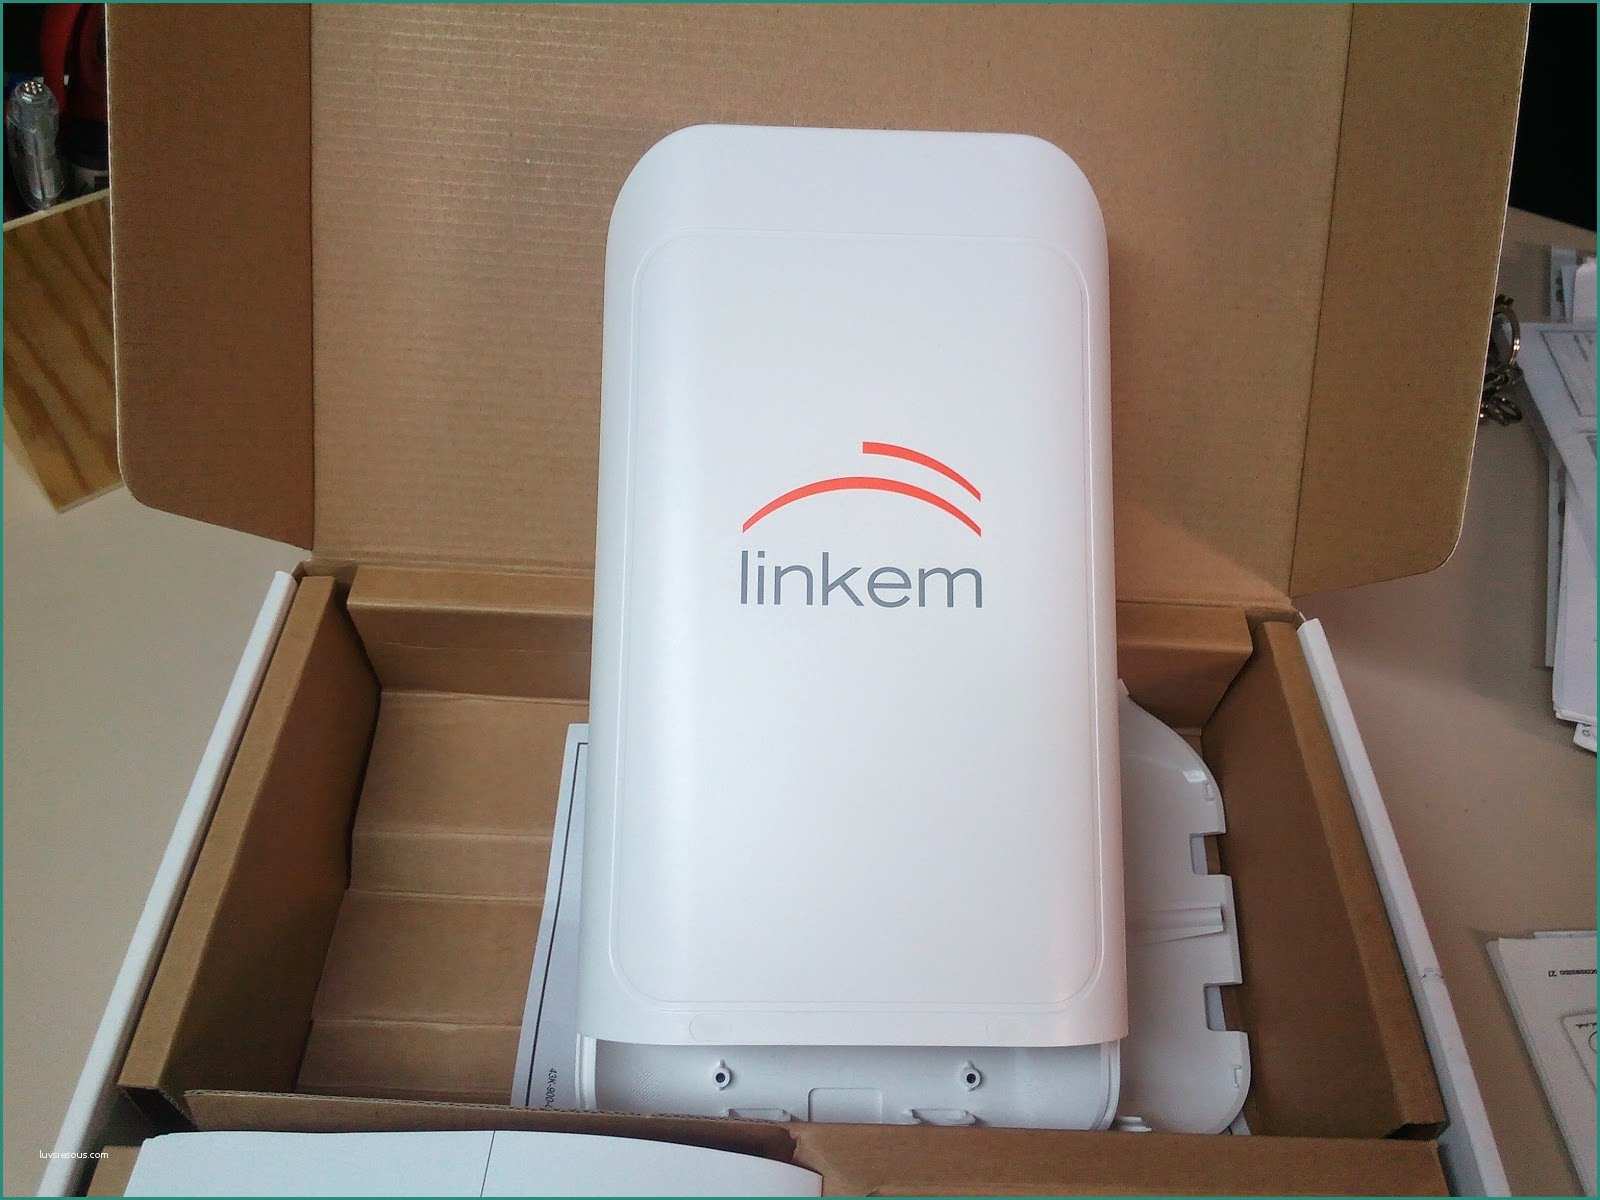 Linkem Disdetta Contratto E Linkem Recensione Unboxing Modem Da Esterno Gemtek Modem Router Wi